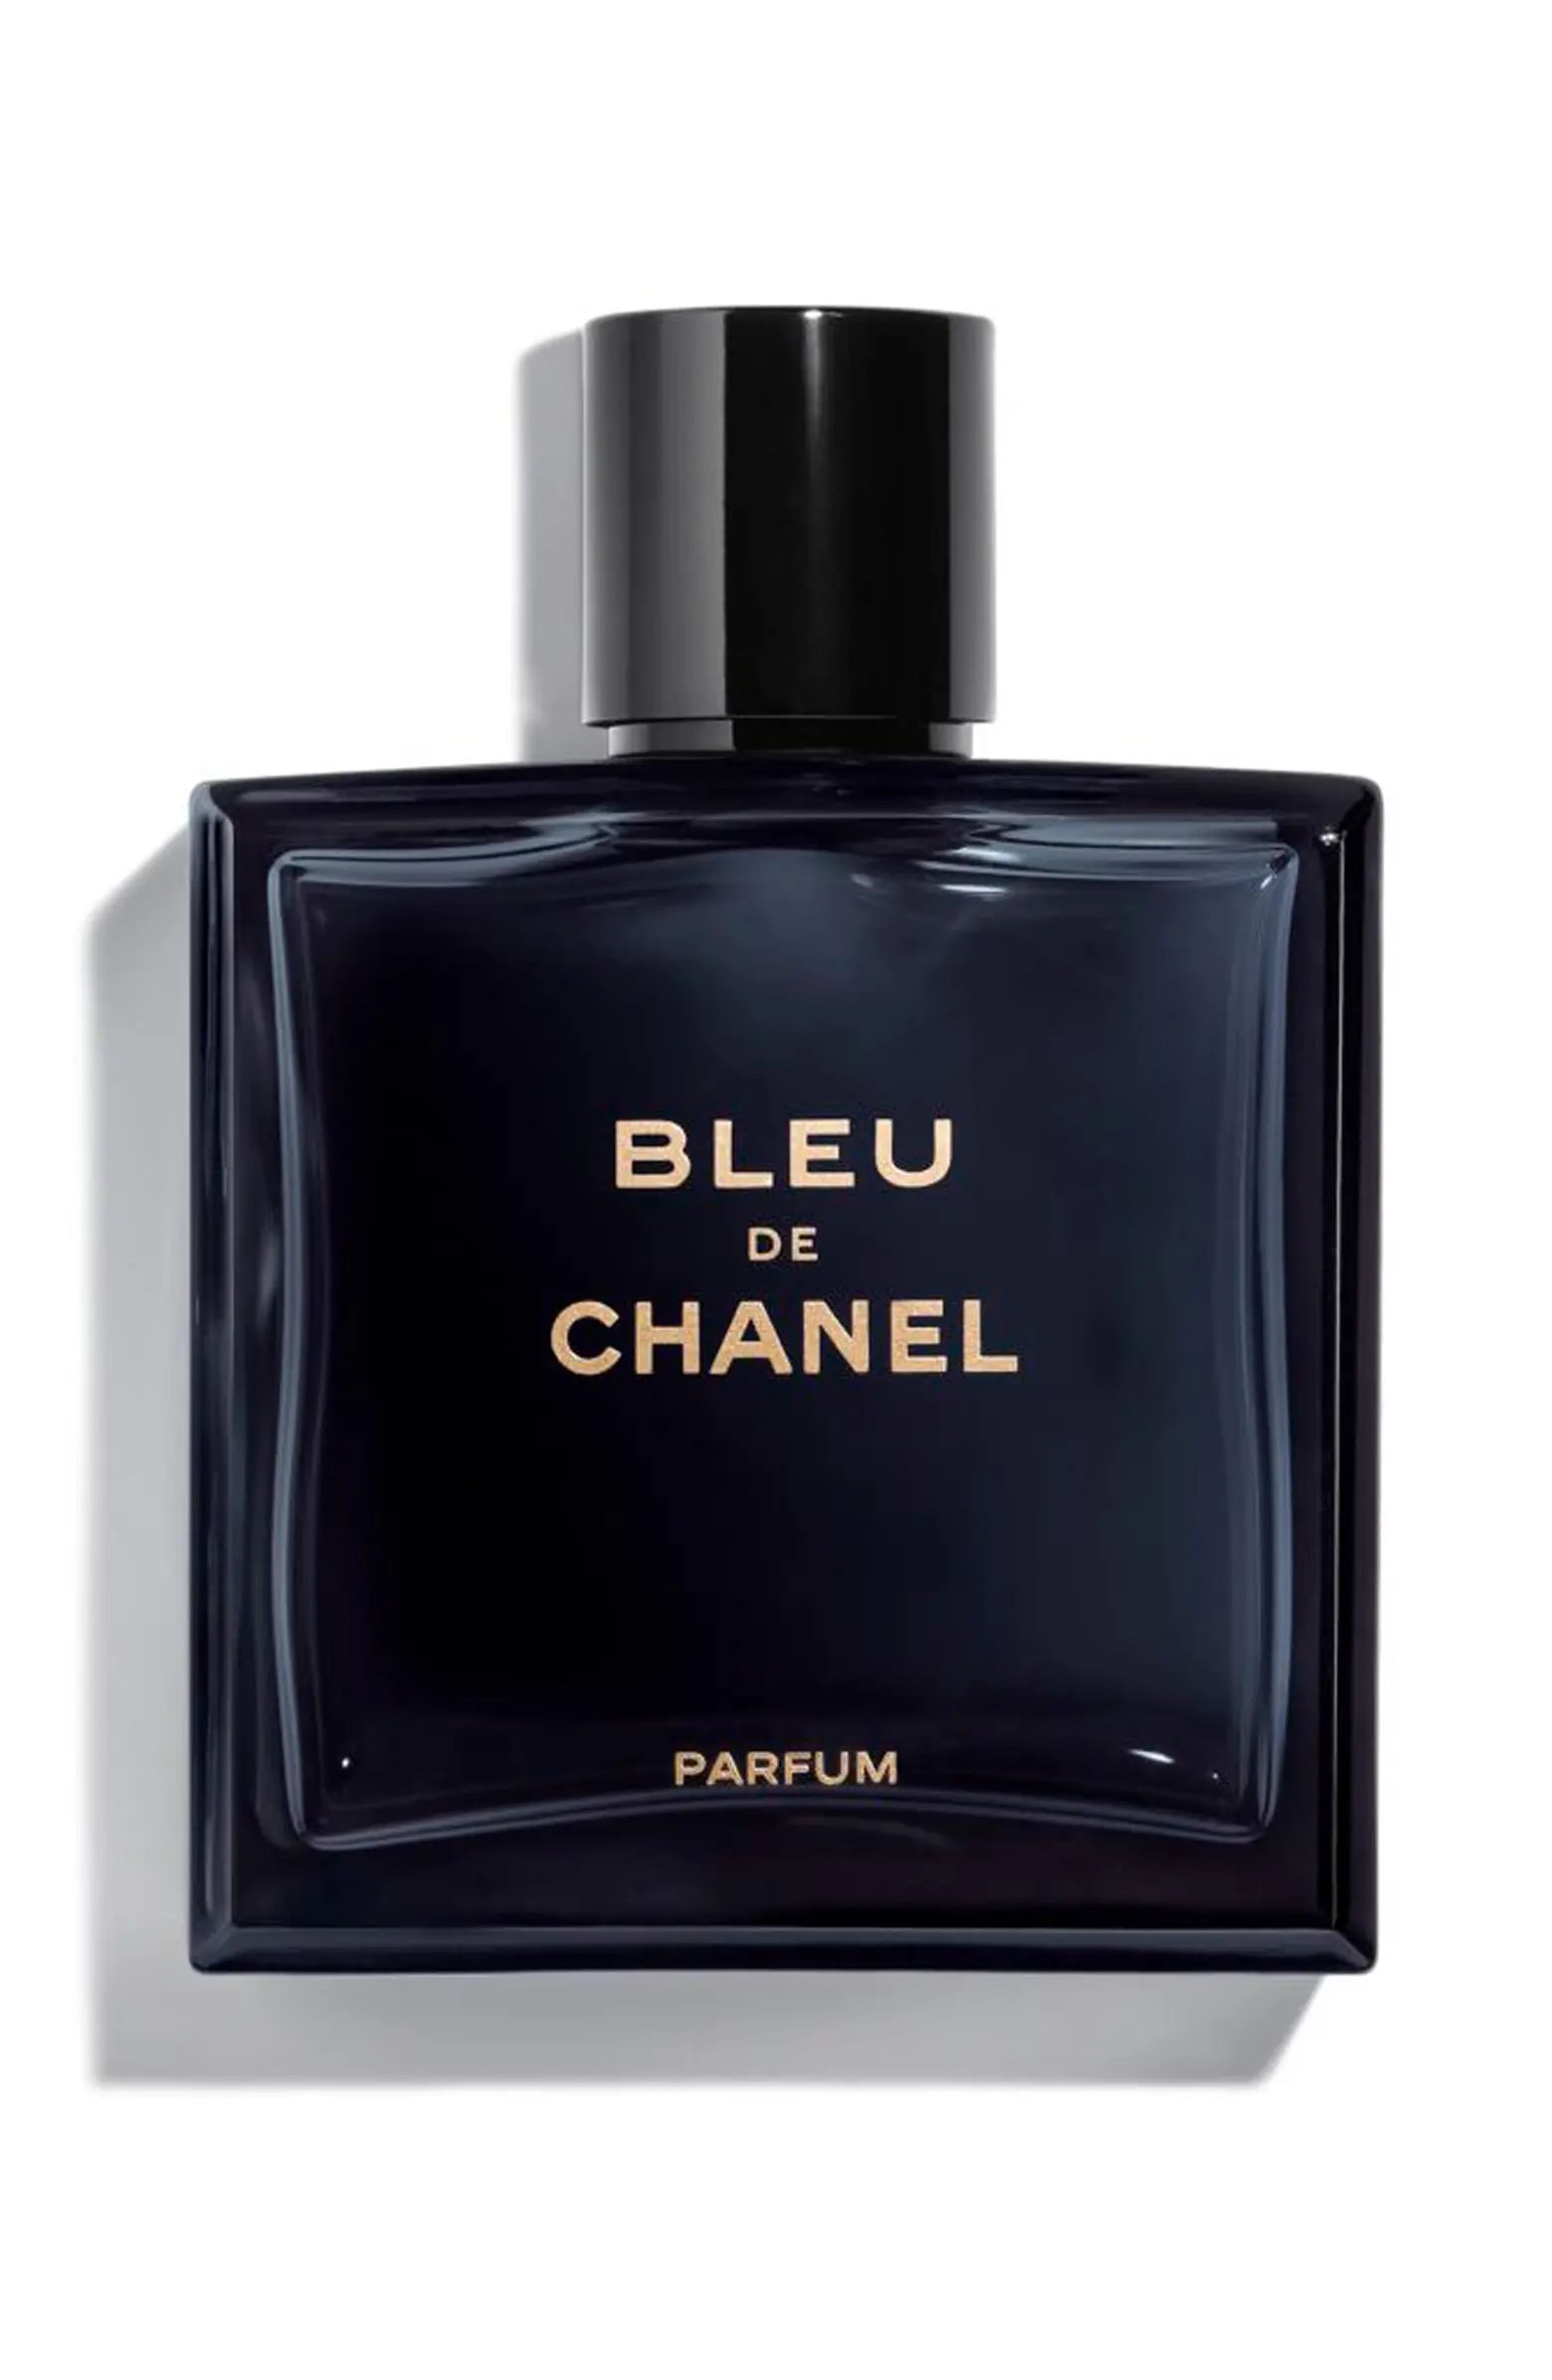 CHANEL BLEU DE CHANEL Parfum | Nordstrom | Nordstrom